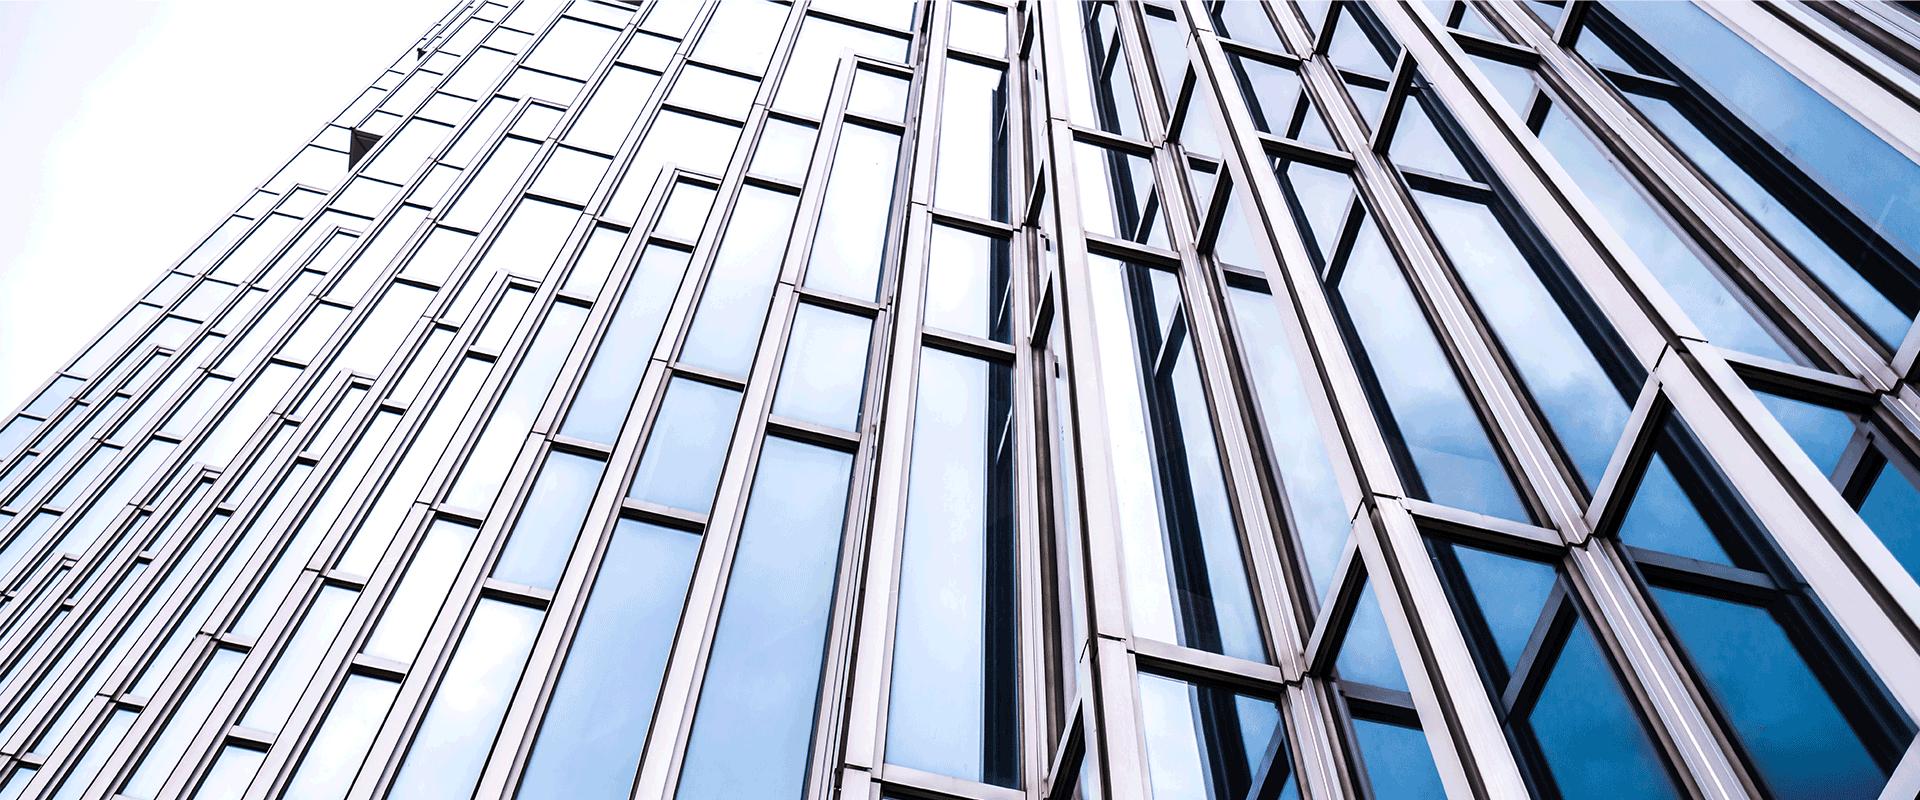 glass windows on building